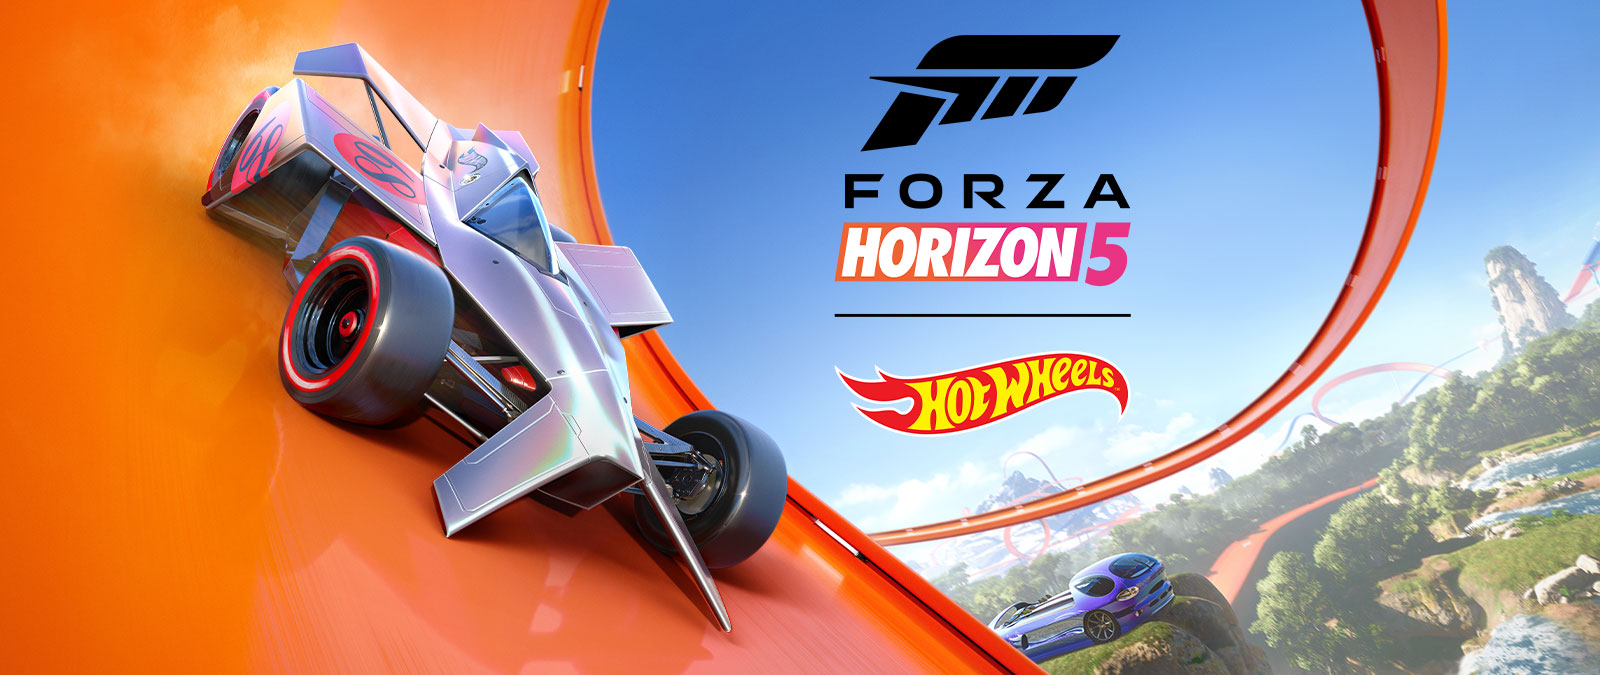 Forza Horizon 5, Hot Wheels, ένα αυτοκίνητο τρέχει σε μια κυκλική πίστα Hot Wheels.